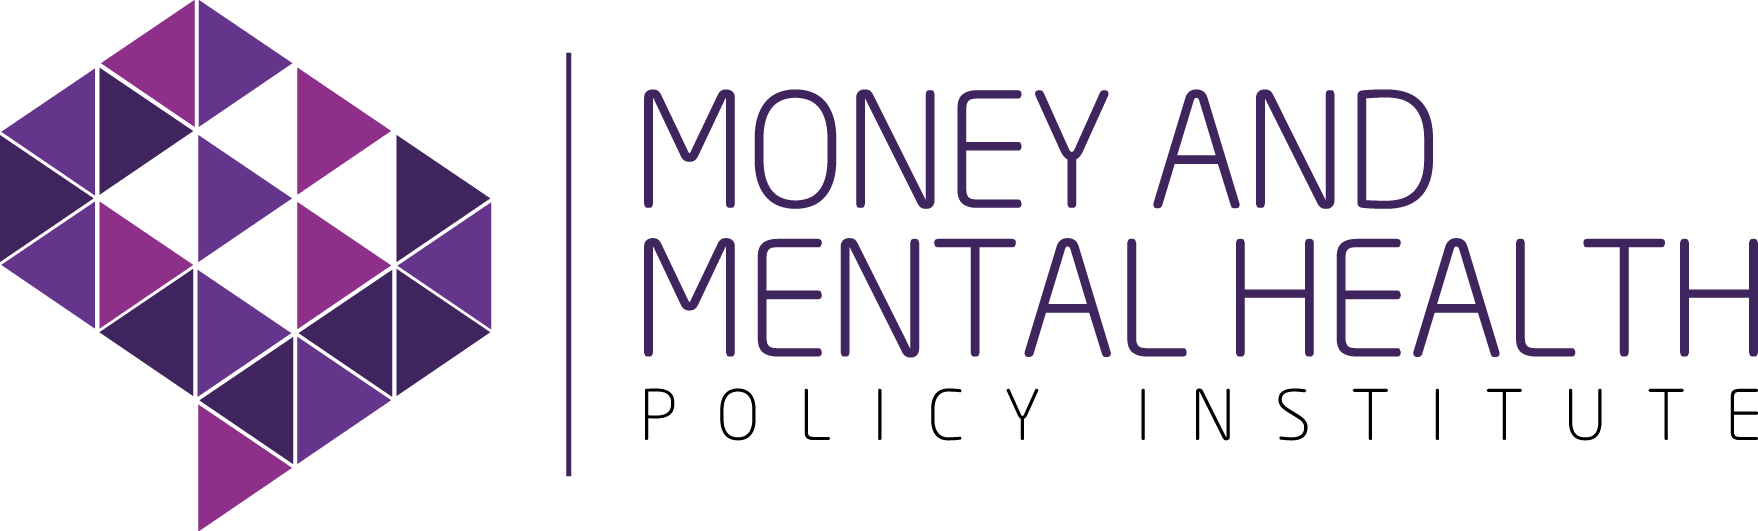 money-and-mental-health-logo---no-background